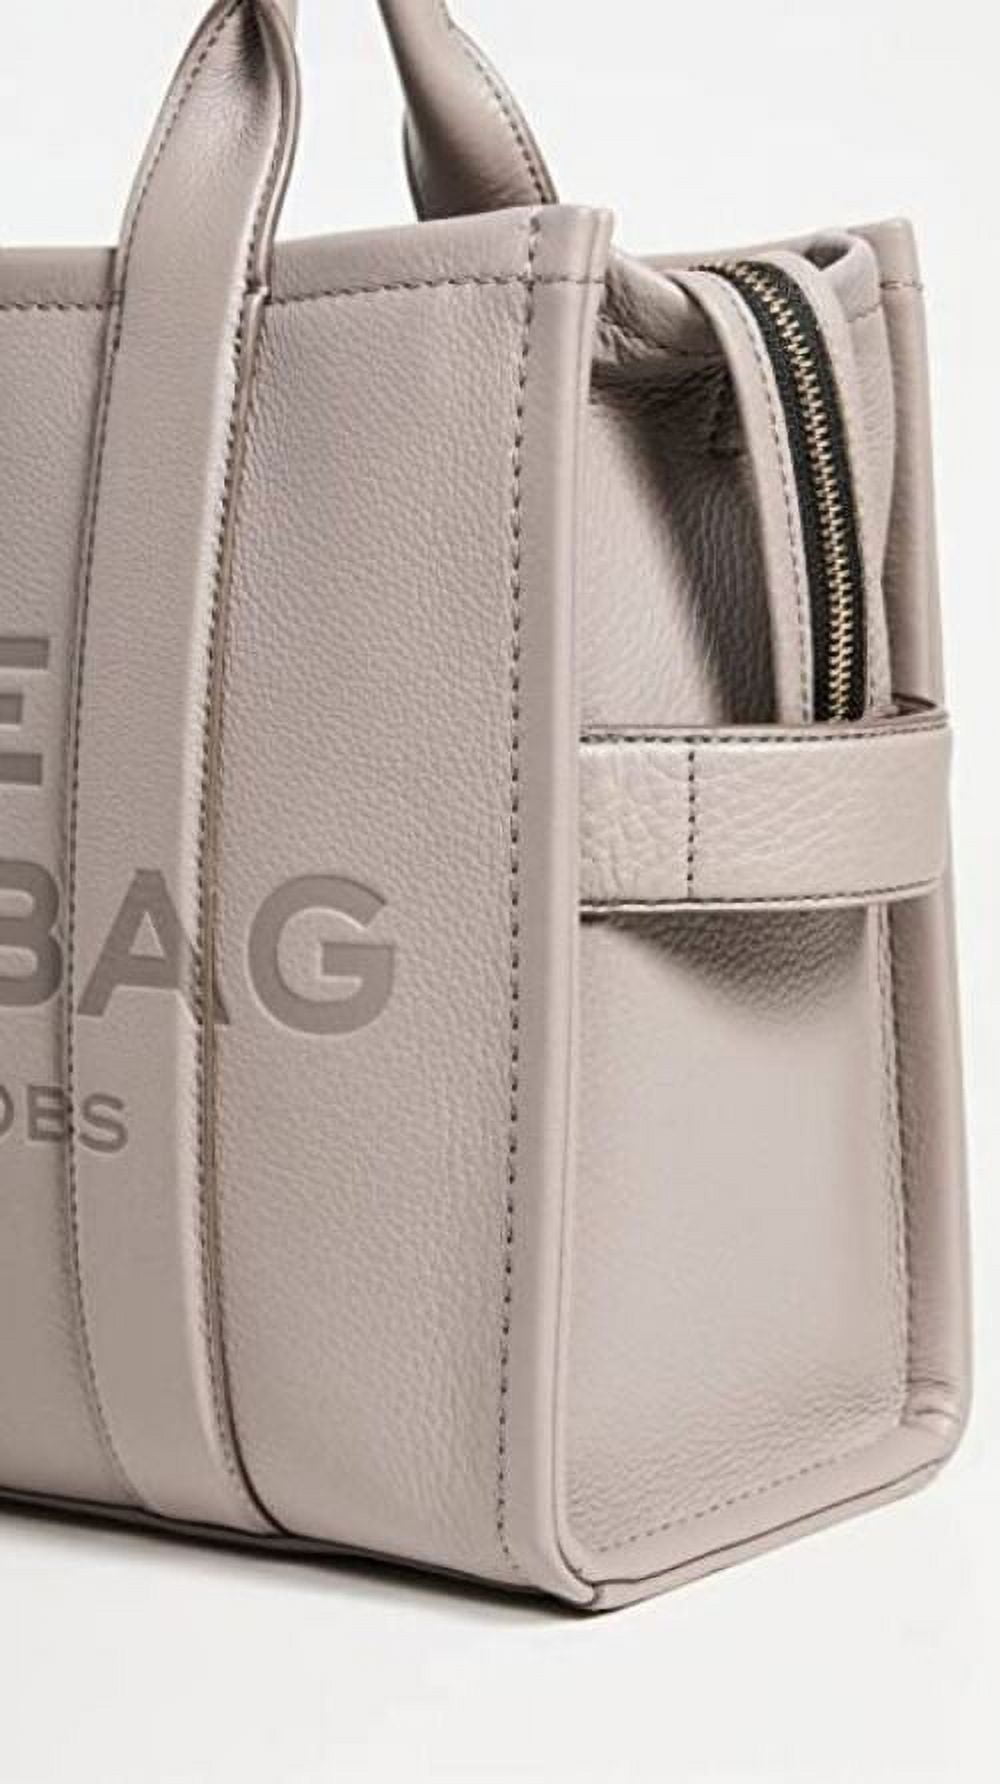 Handbags Marc Jacobs, Style code: h004l01pf21-137